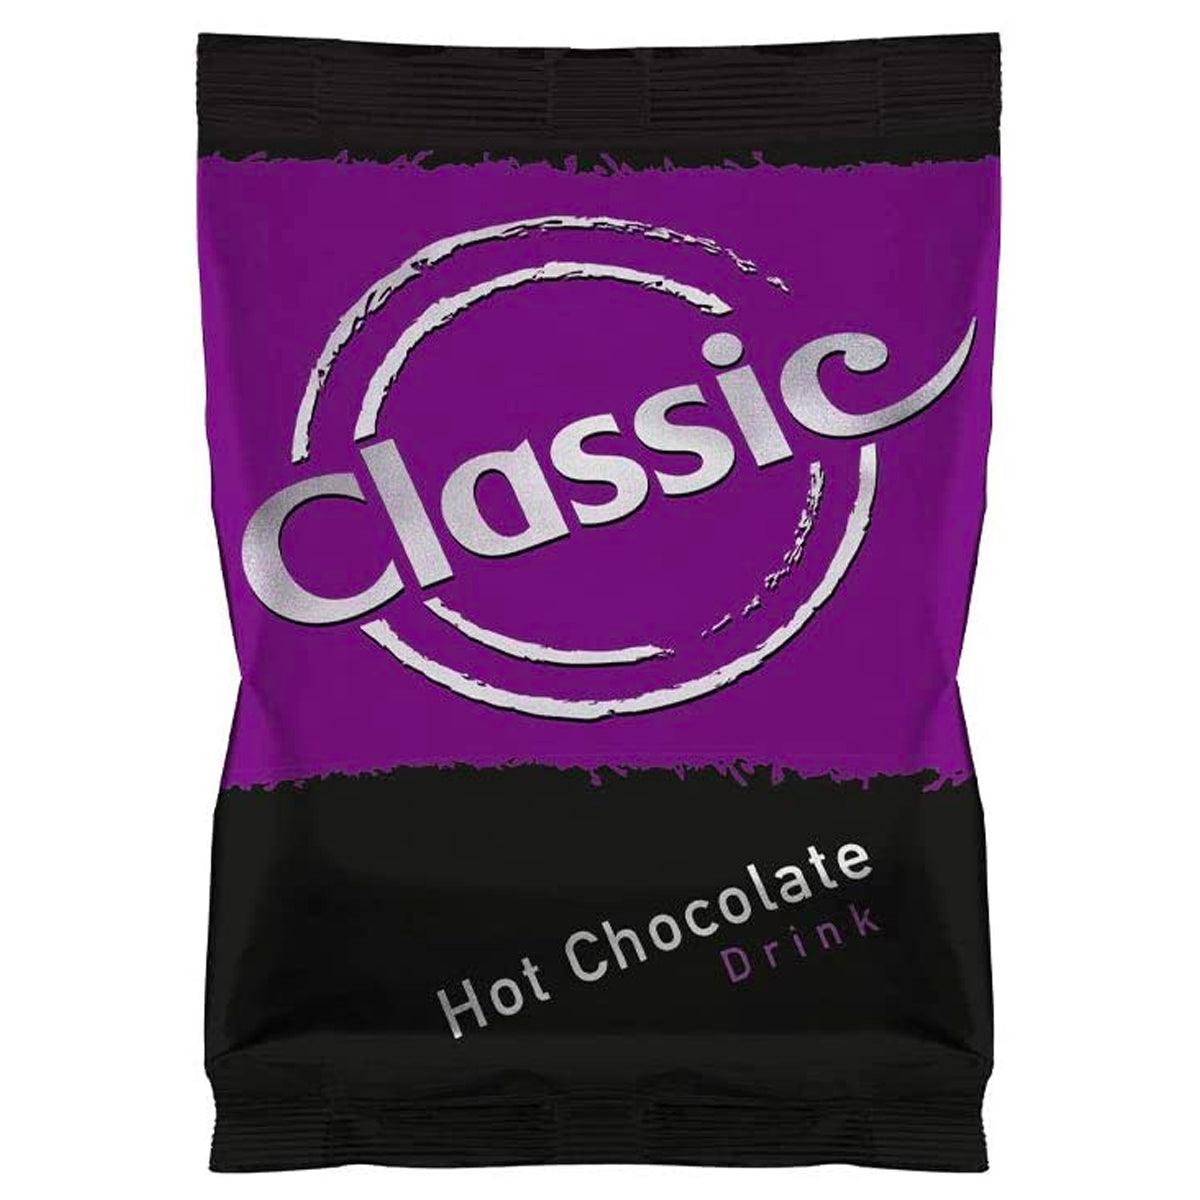 Classic Vending Hot Chocolate Creemchoc - 1kg Bag - Vending Superstore